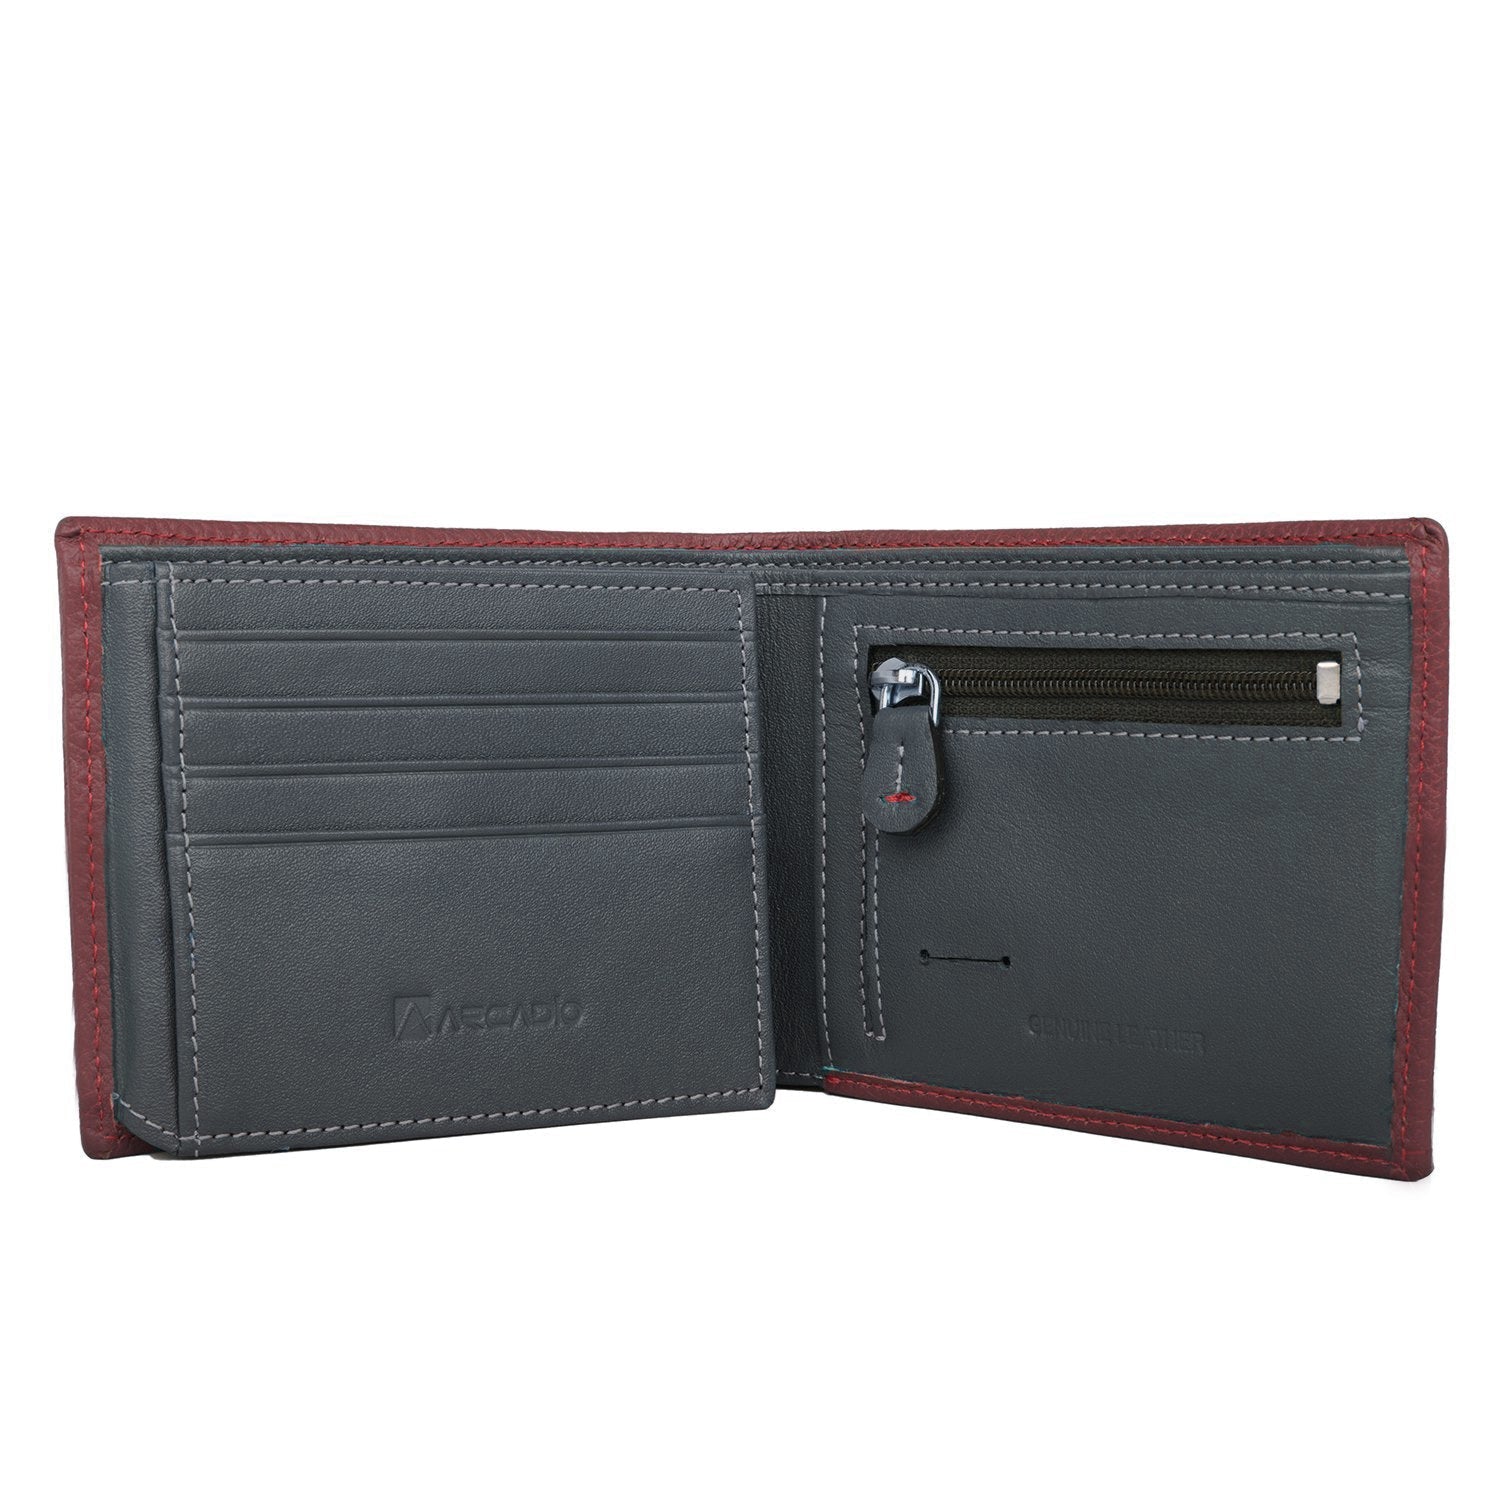 TWIN FUN Dual Toned Leather Wallet ARW1010RD ARCADIO